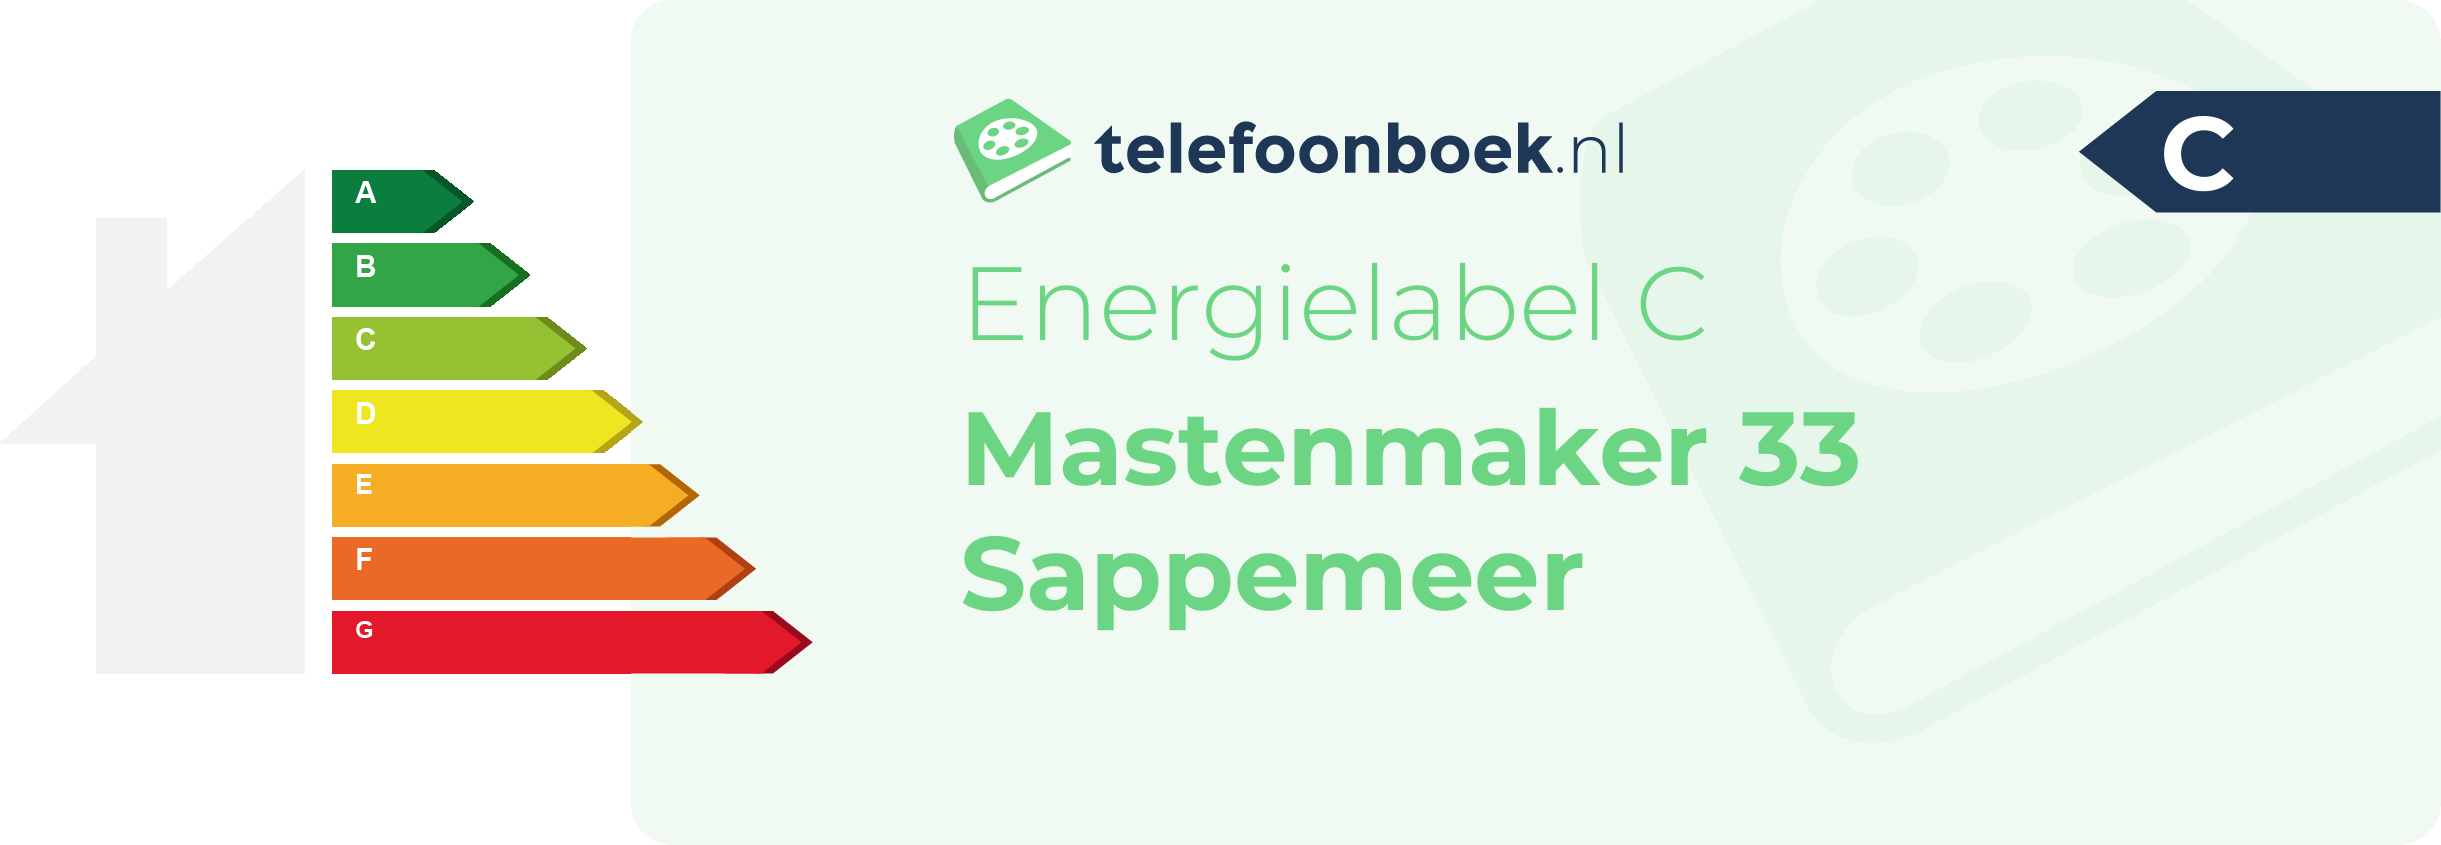 Energielabel Mastenmaker 33 Sappemeer